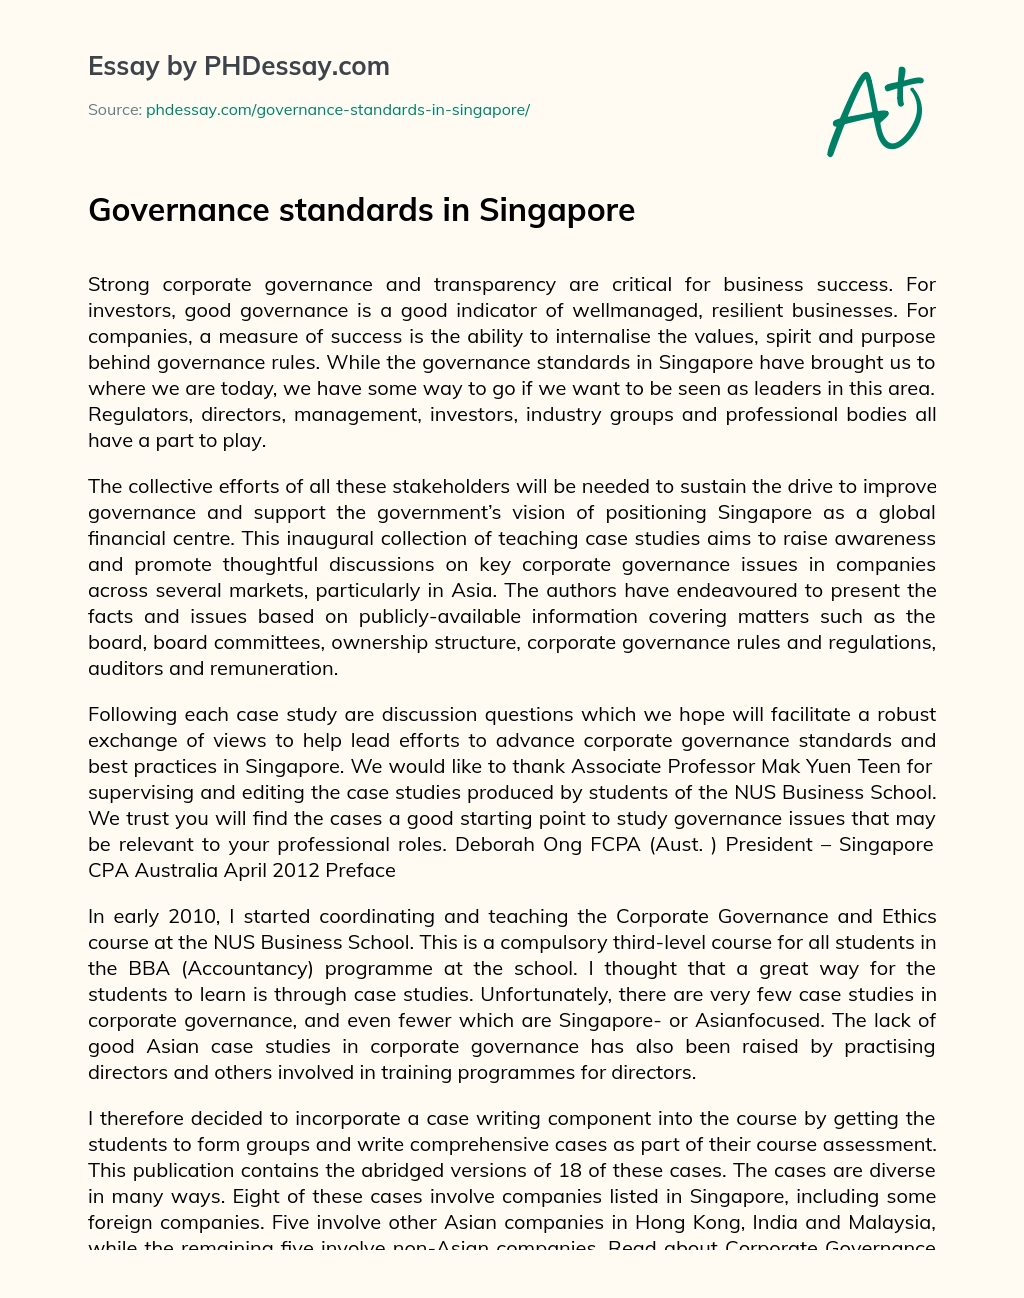 Governance standards in Singapore essay